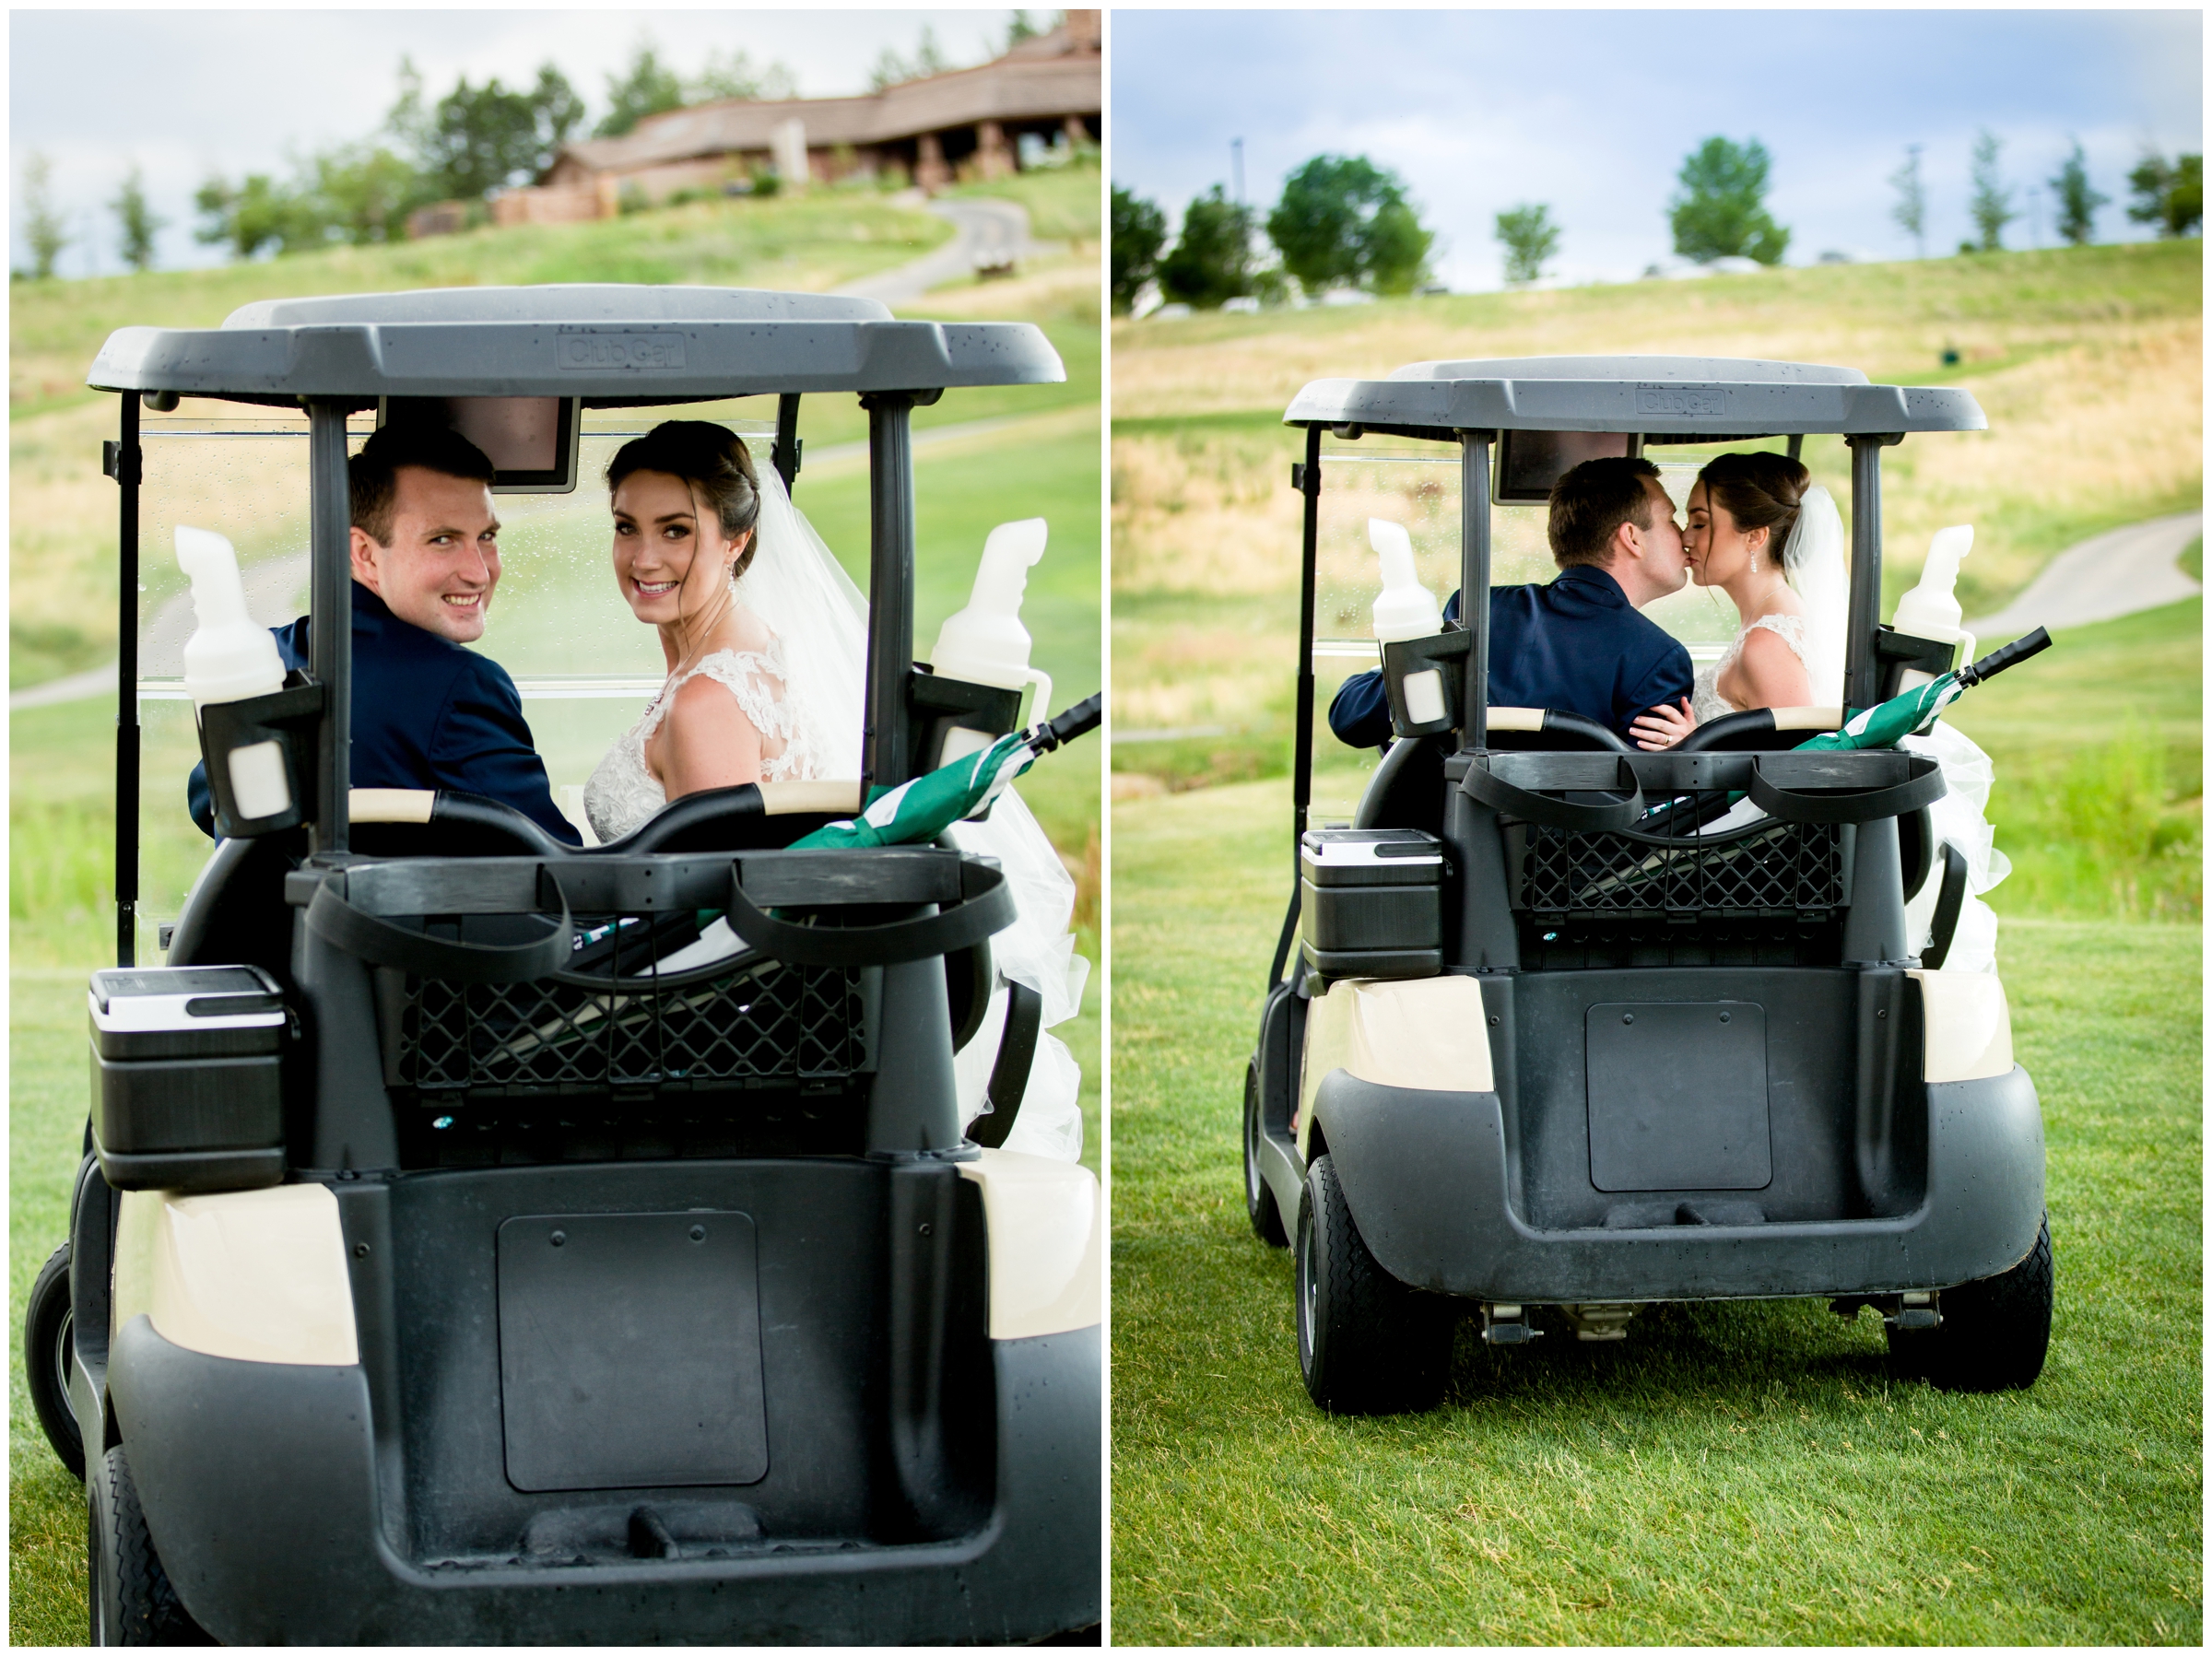 couple riding golf cart in wedding attire at Colorado National Golf Club wedding 